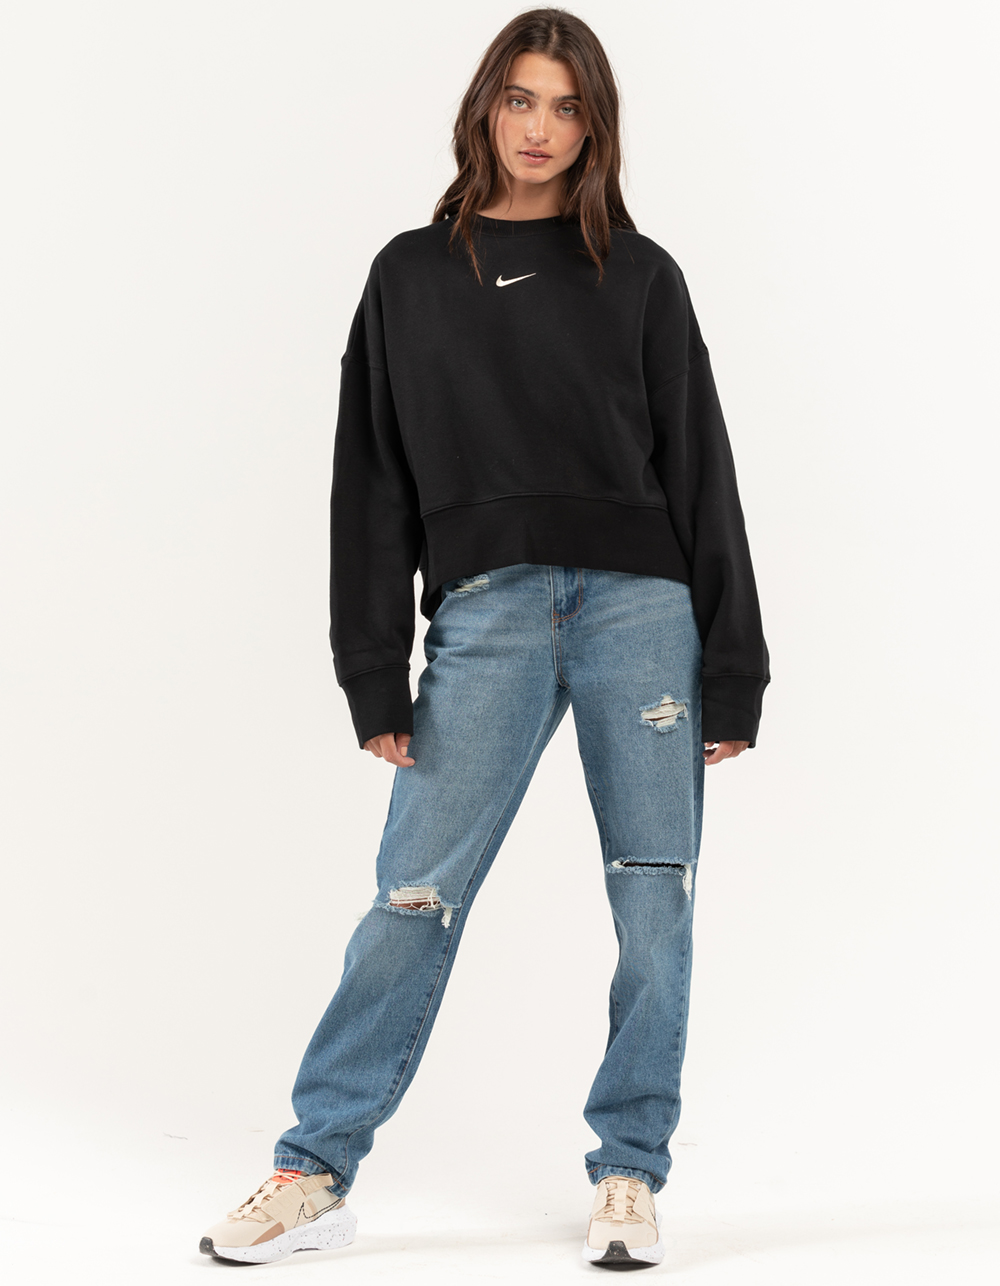 NIKE Sportswear Womens Oversized Crewneck Sweatshirt - BLACK